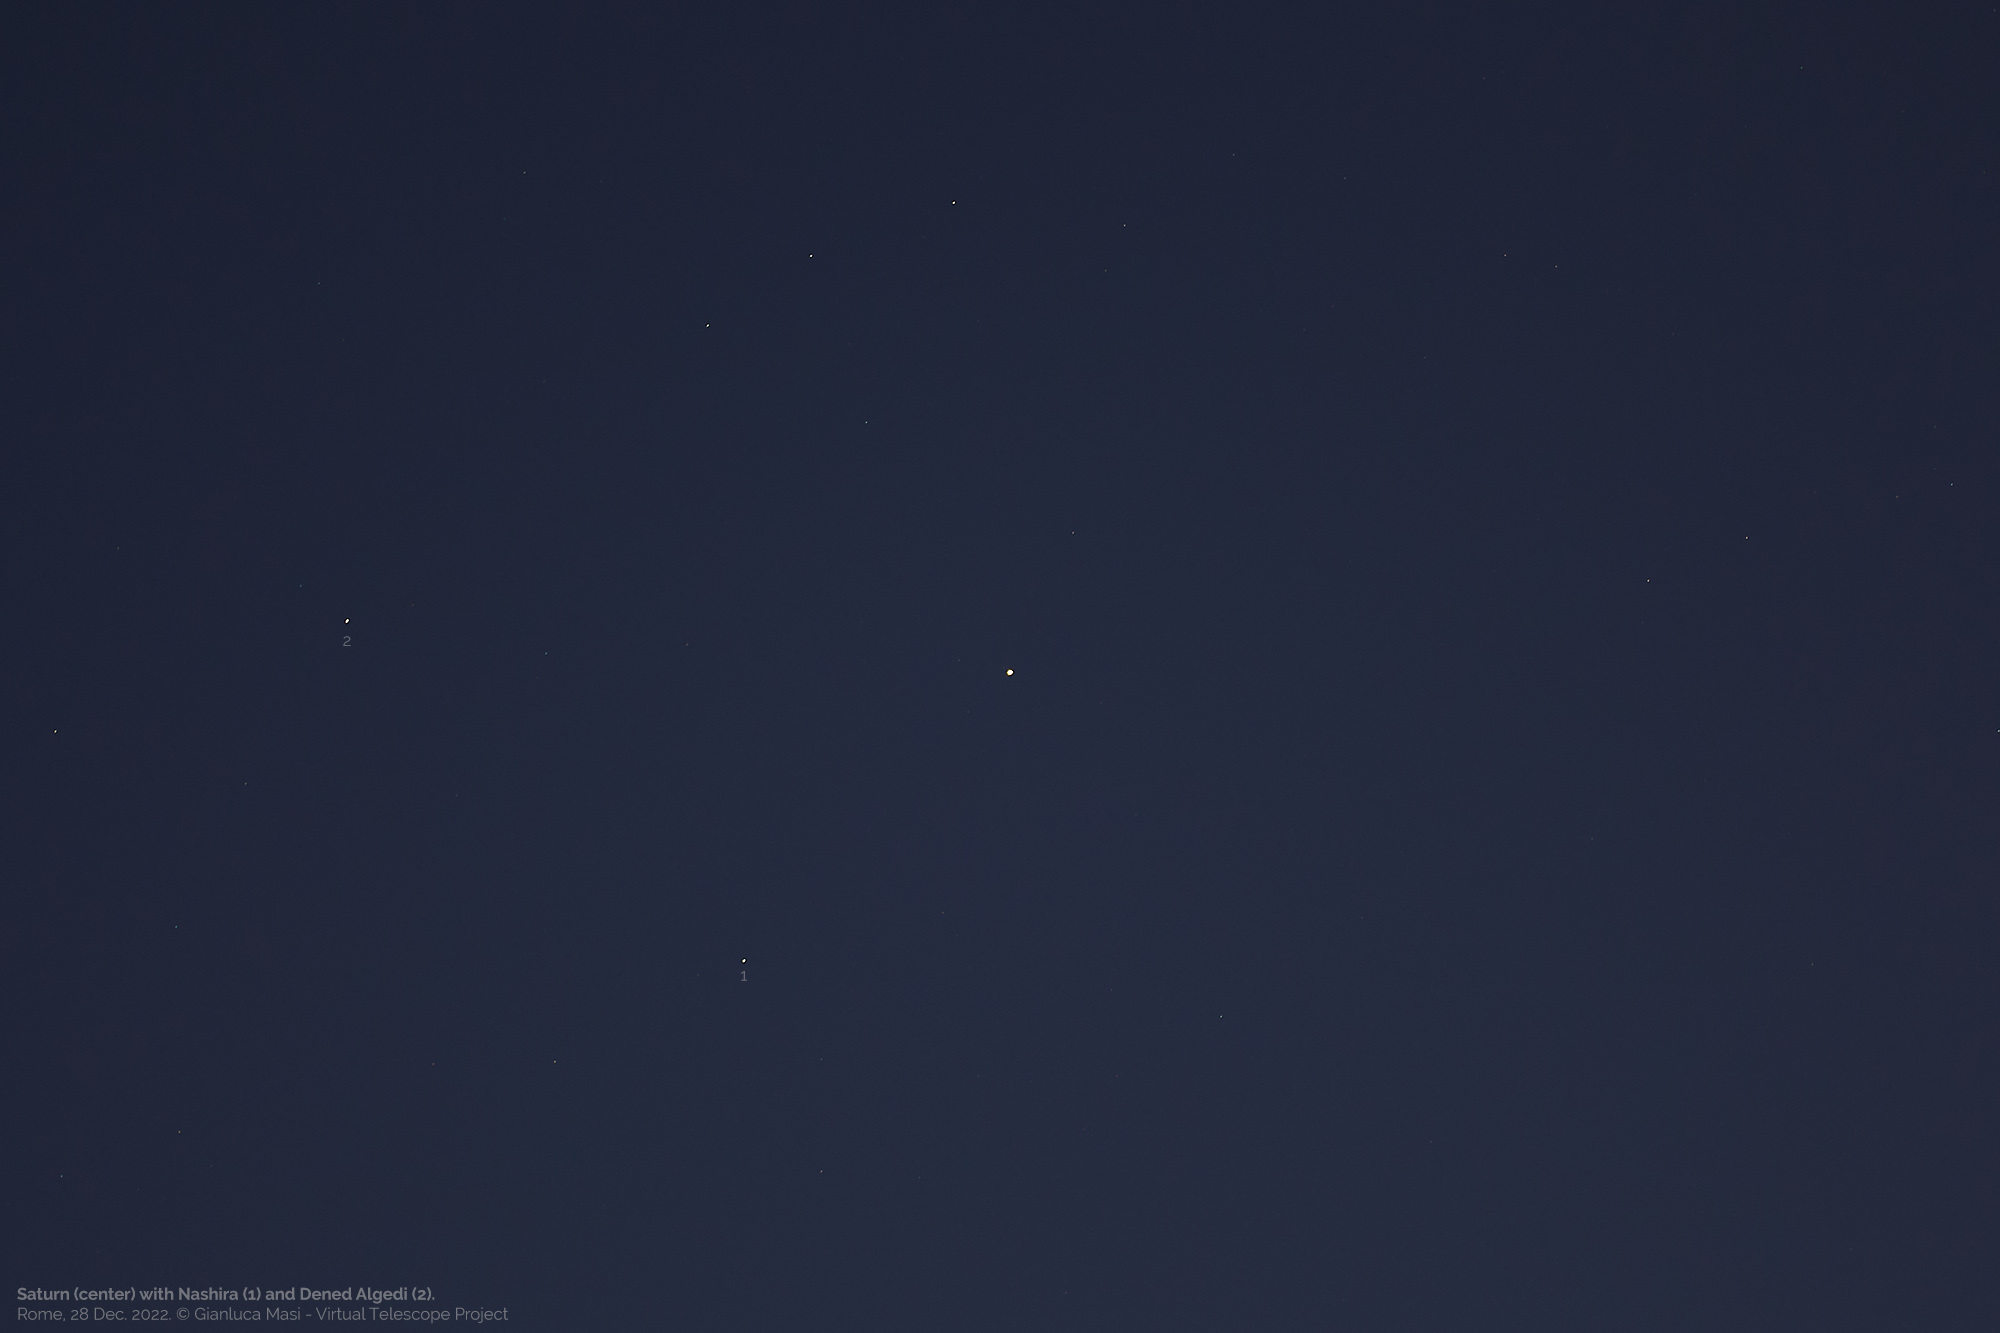 Saturn, with the stars Nashira and Deneb Algedi in Capricornus.